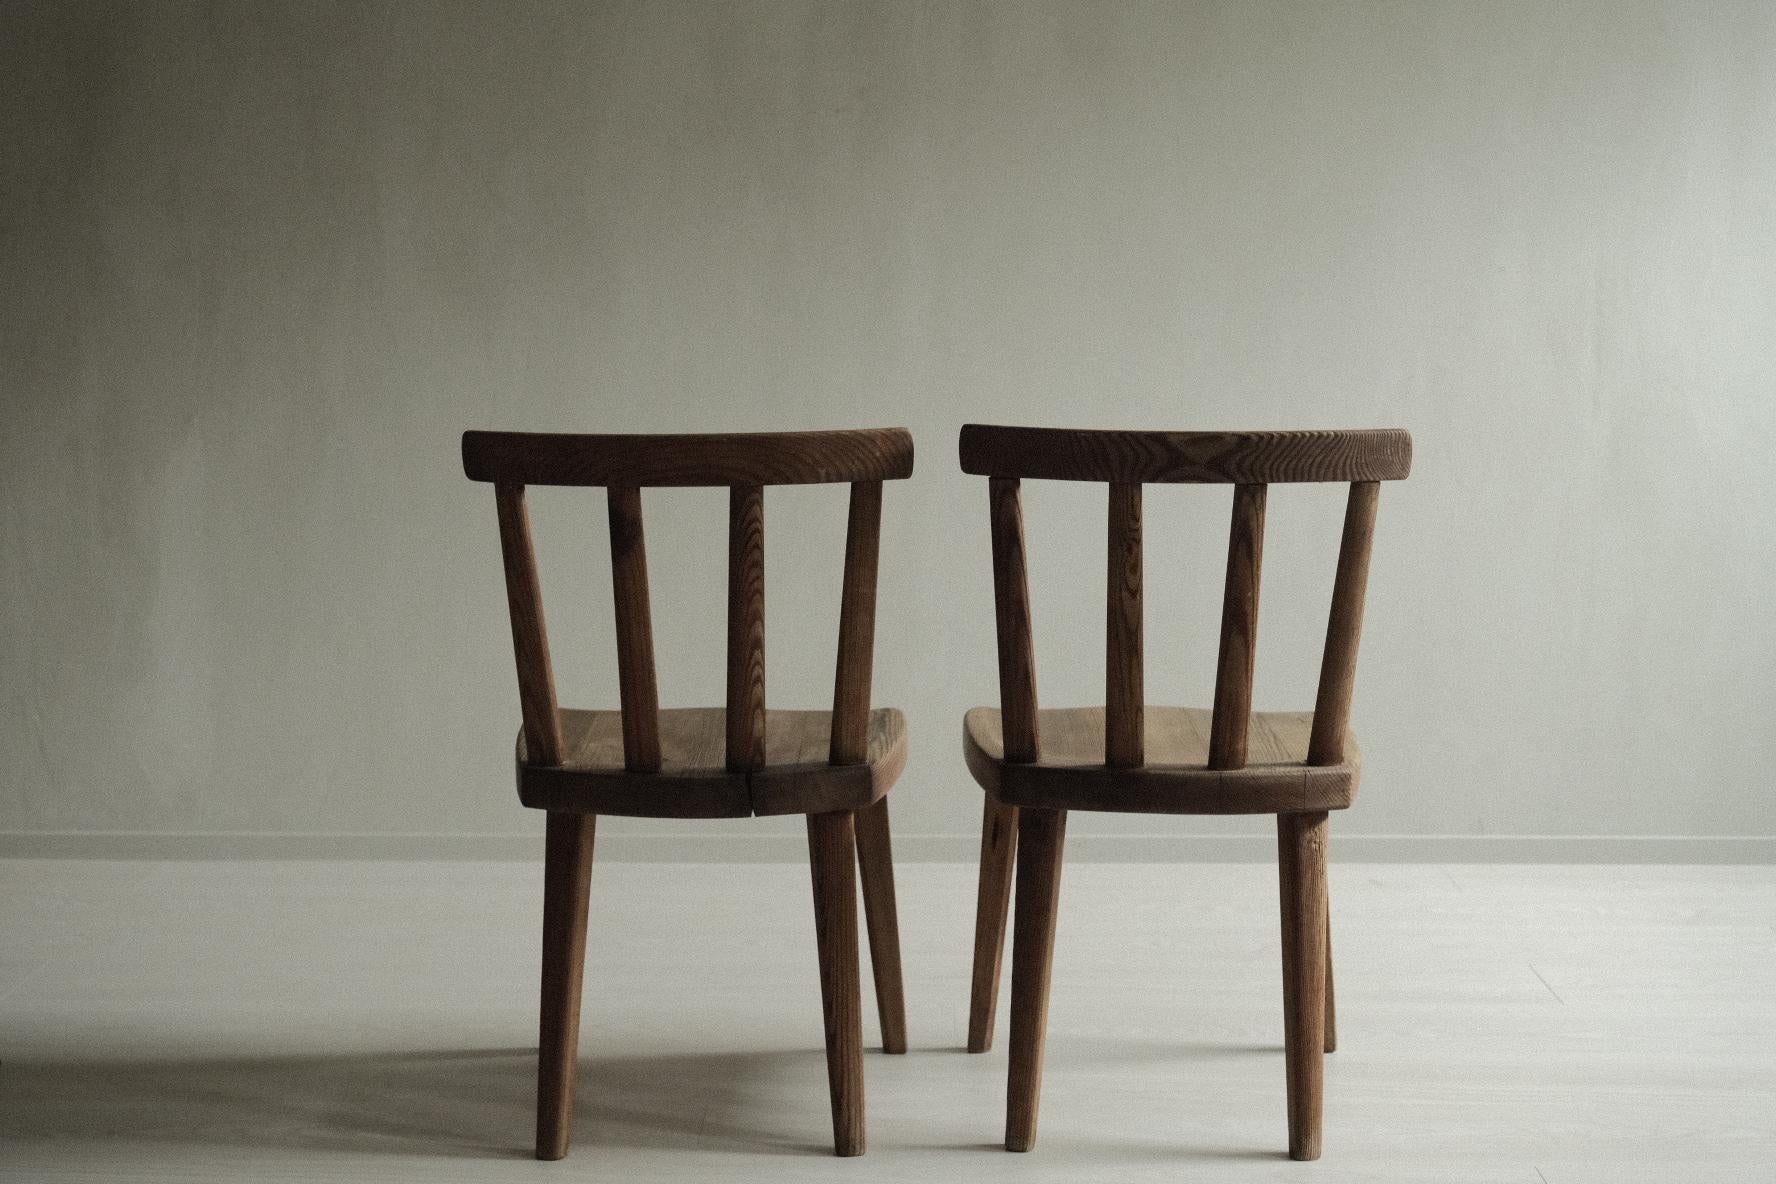 20th Century Pair of Utö Dining Chairs by Axel Einar Hjorth for Nordiska Kompaniet, 1930s